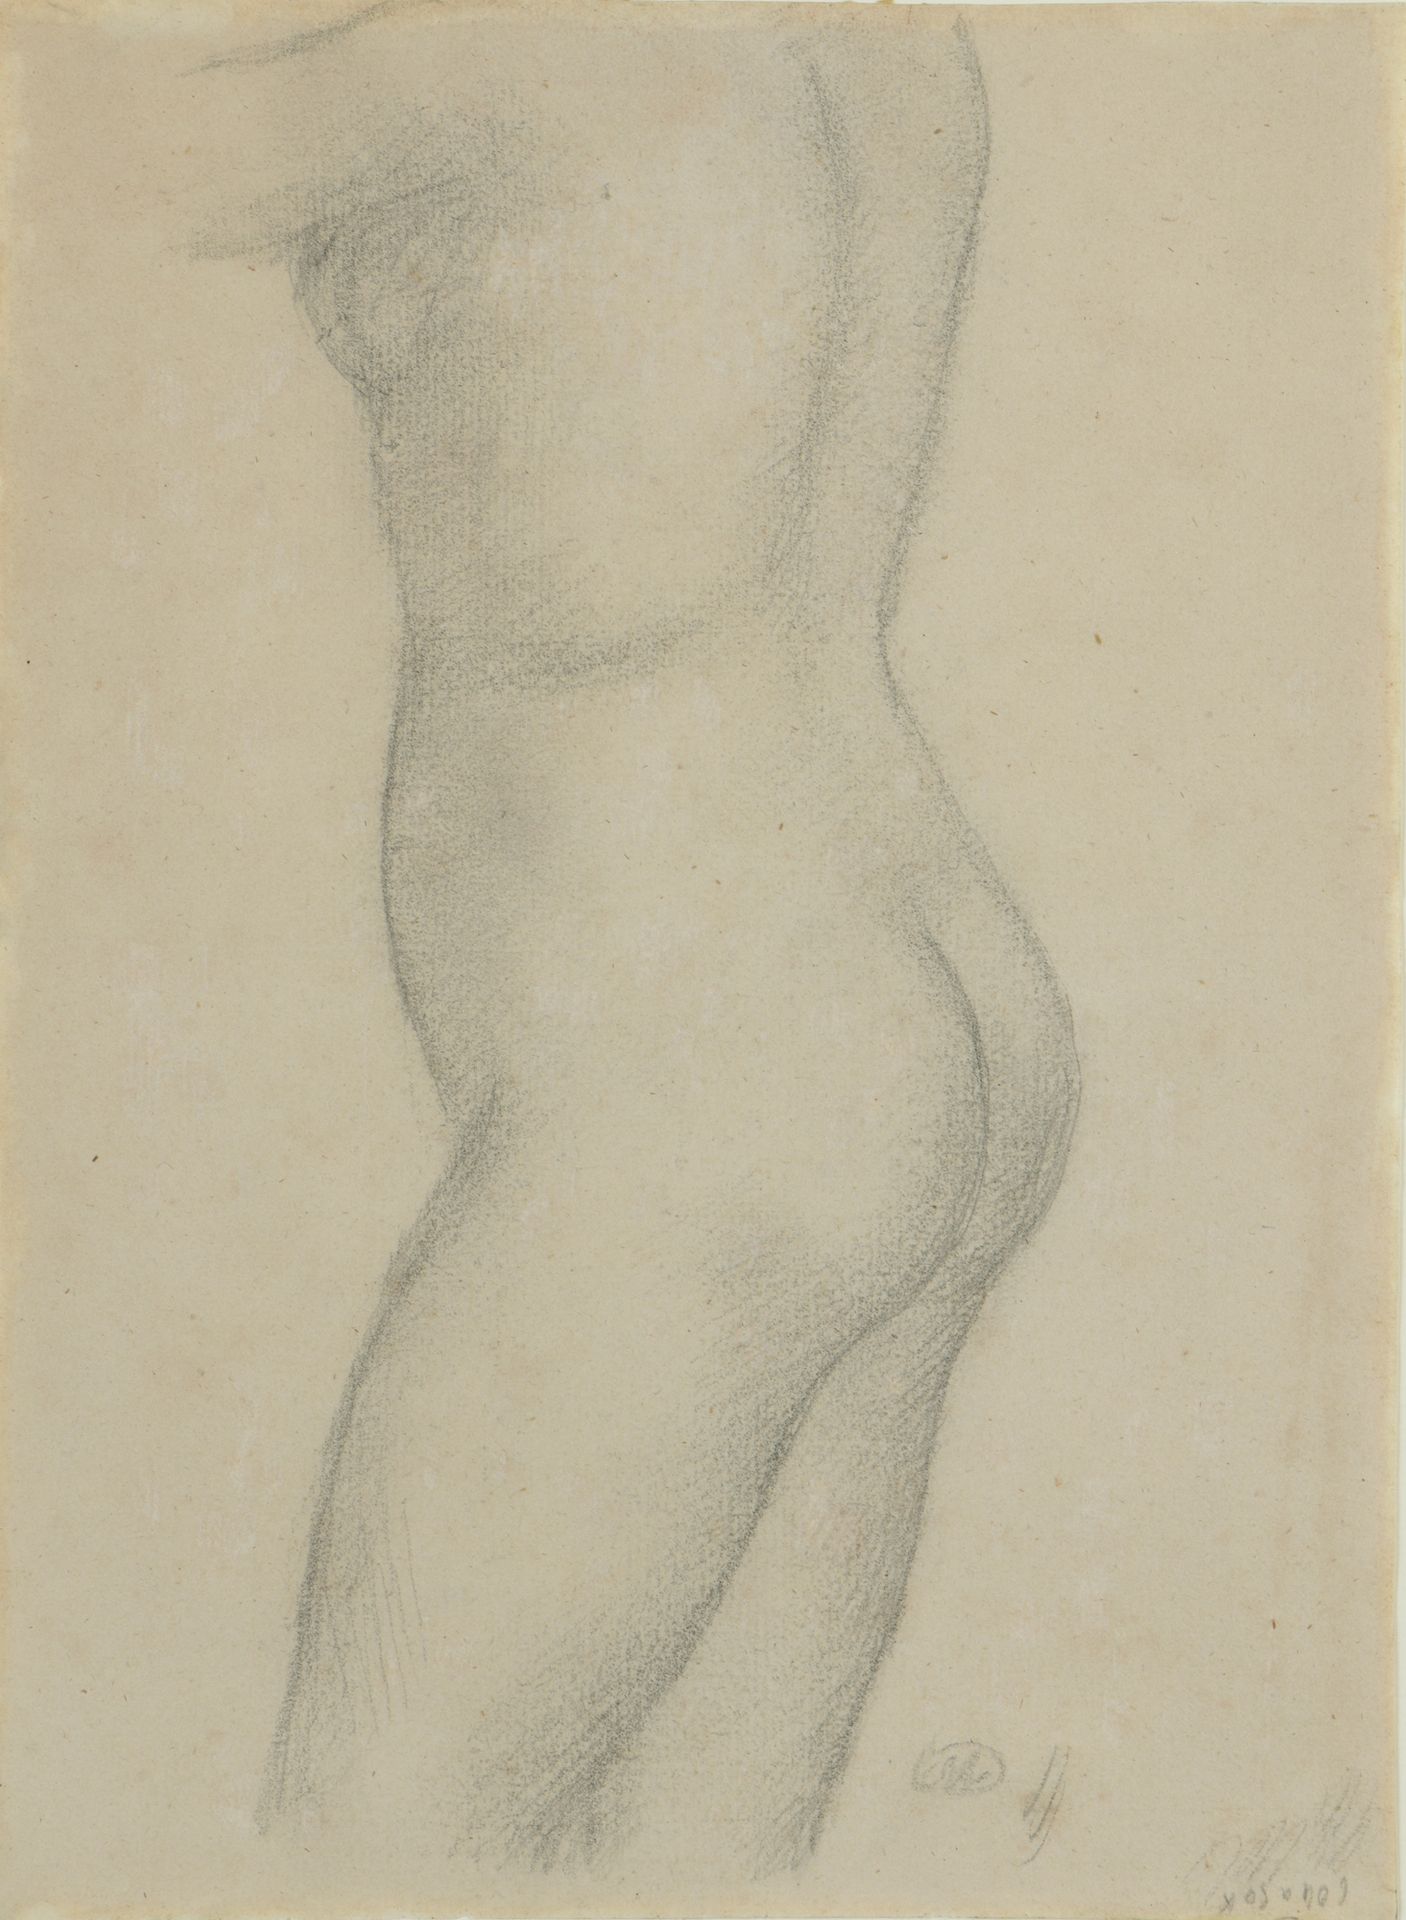 Null Aristide Maillol (1861-1944) 

Nudo femminile

Matita nera, sfocatura 

Mon&hellip;